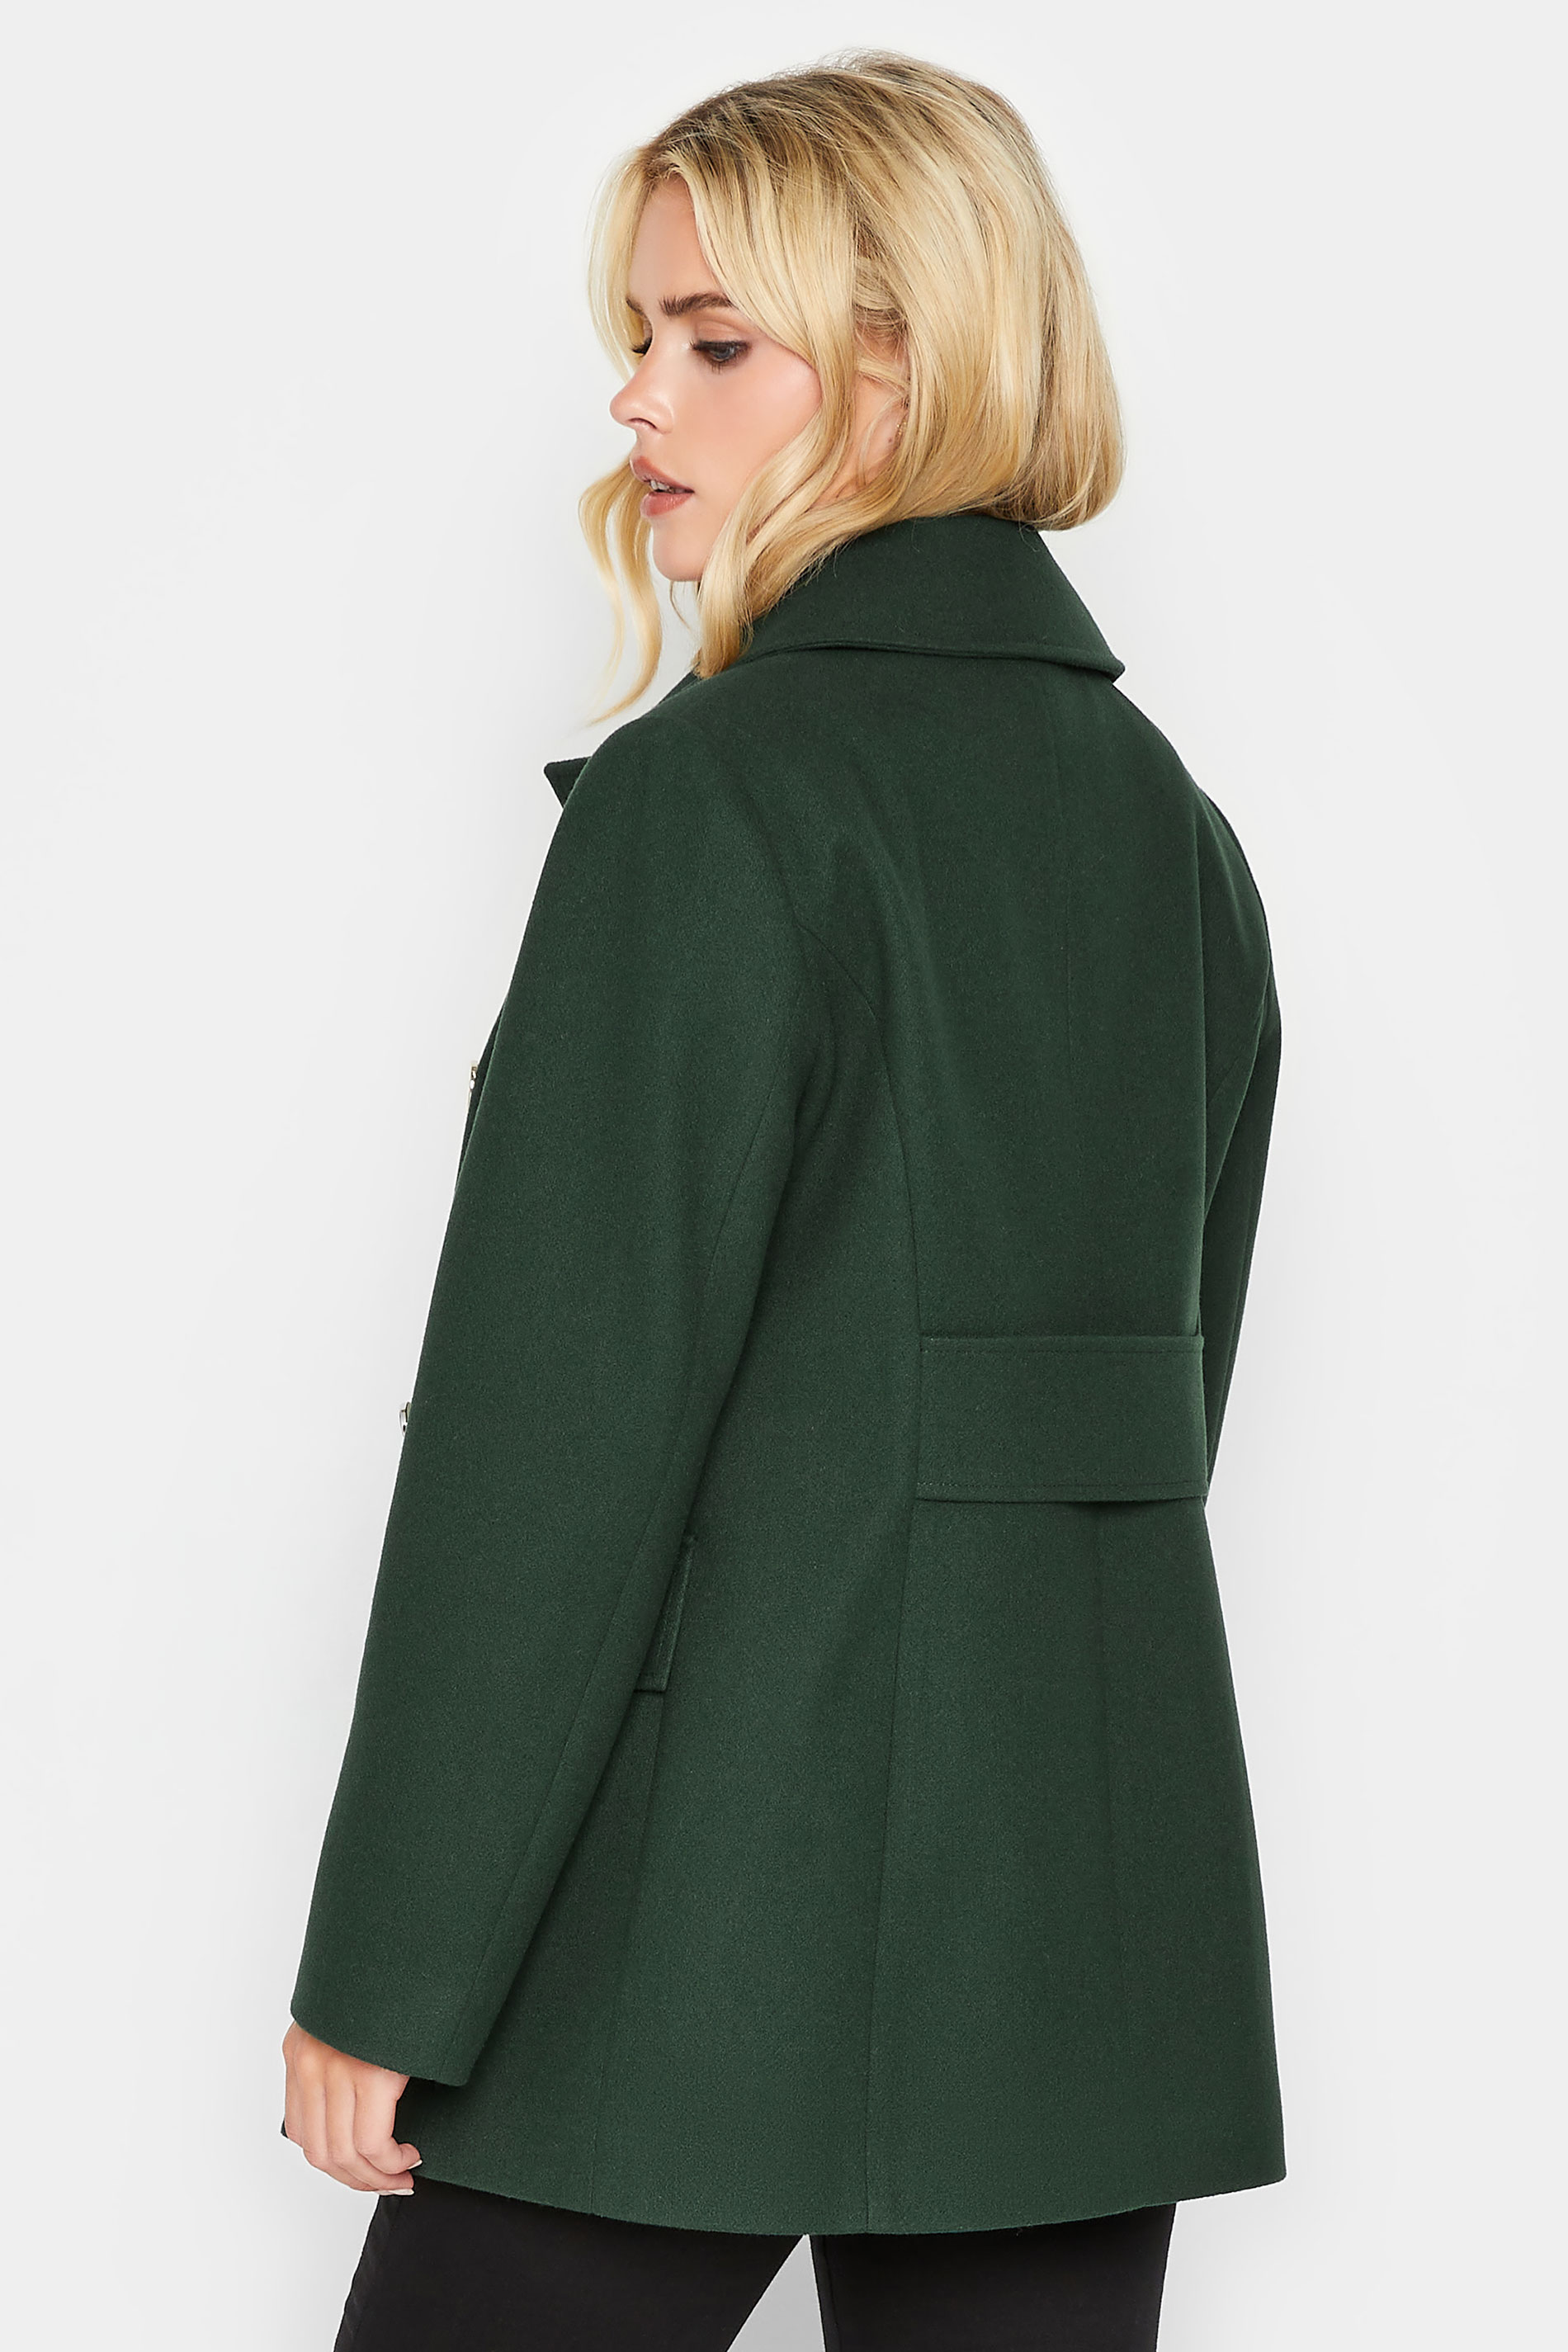 Petite Forest Green Pea Coat | PixieGirl 3